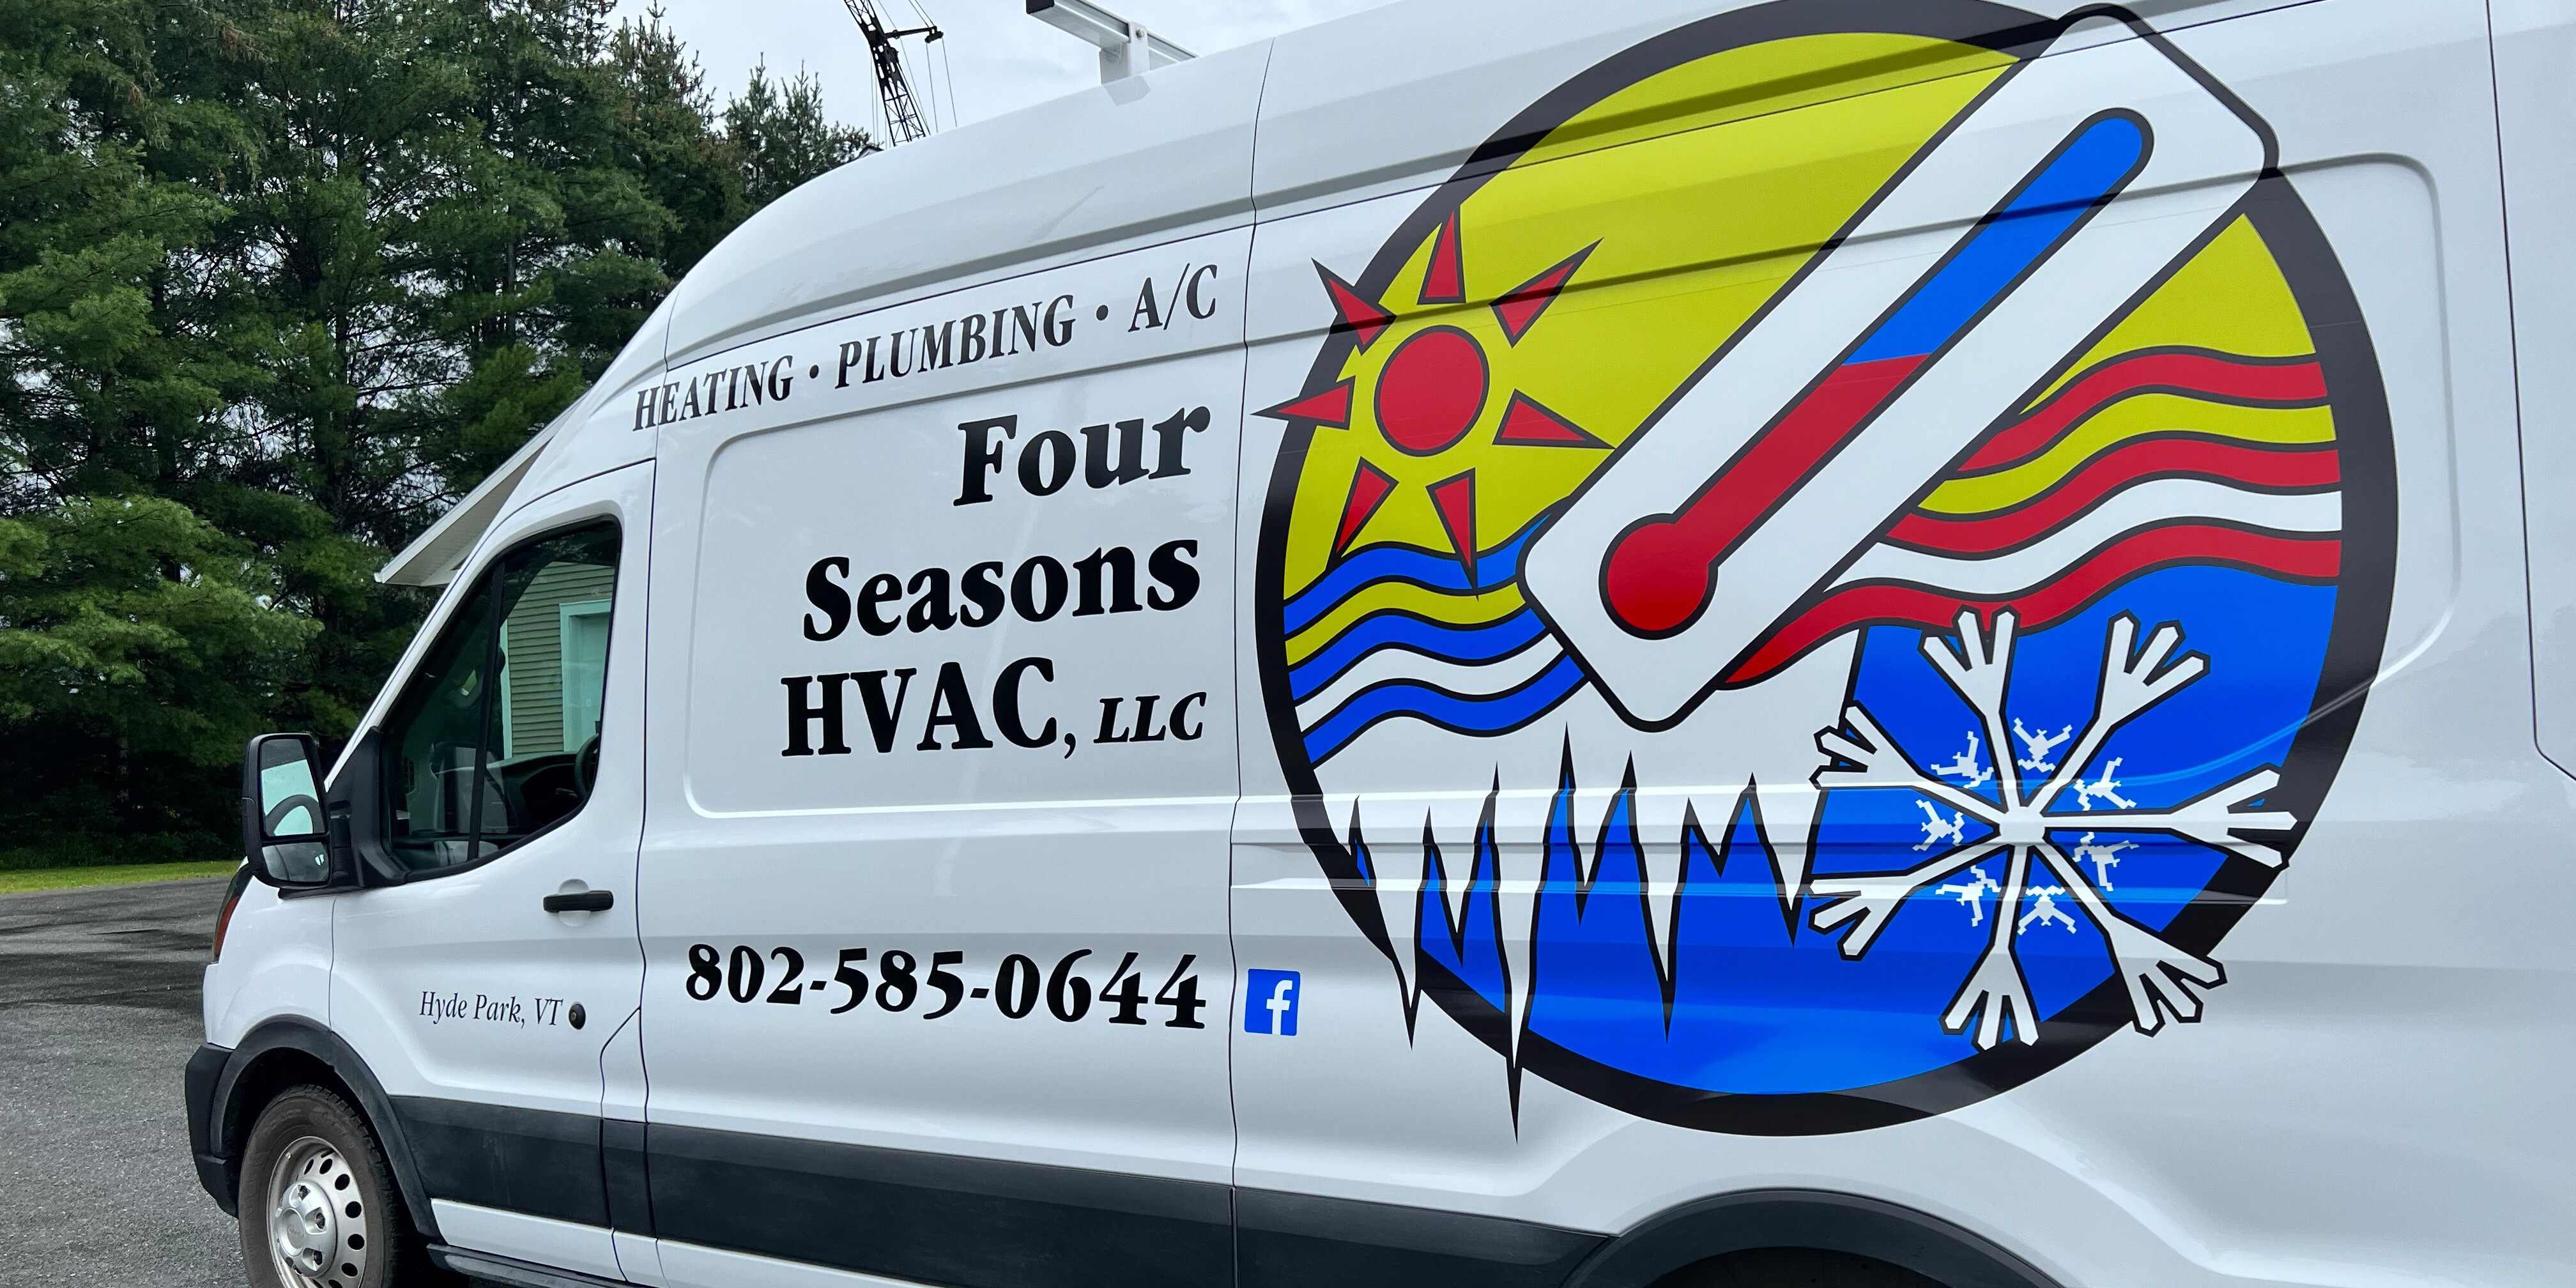 Plumbers van with professional vehicle graphics